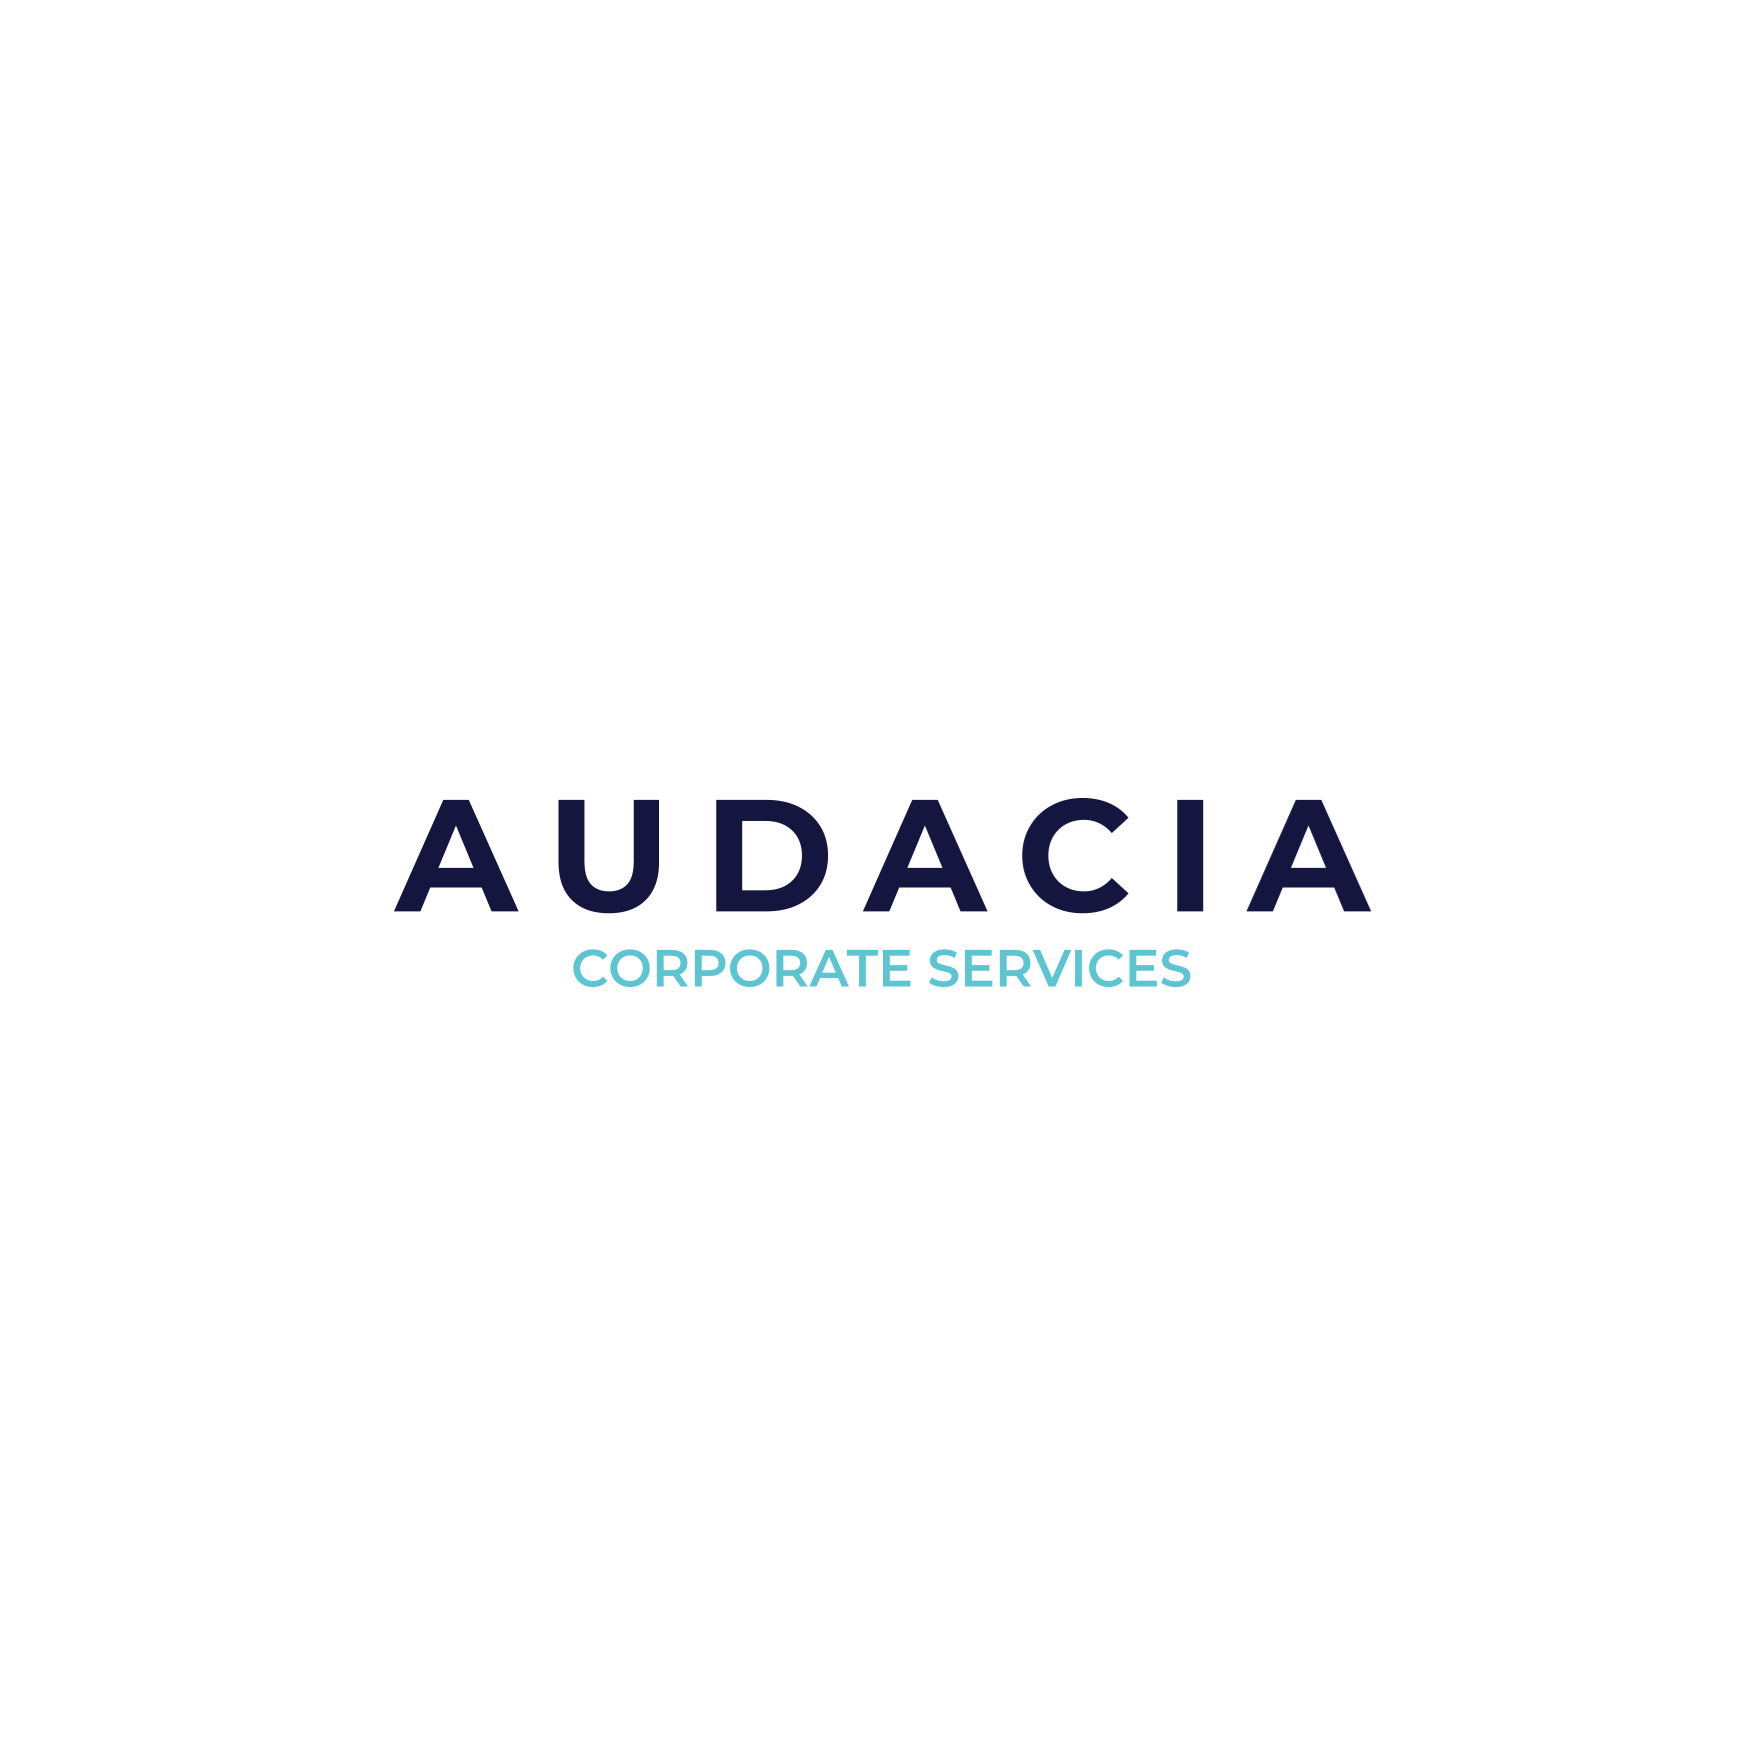 Audacia Corporate Services